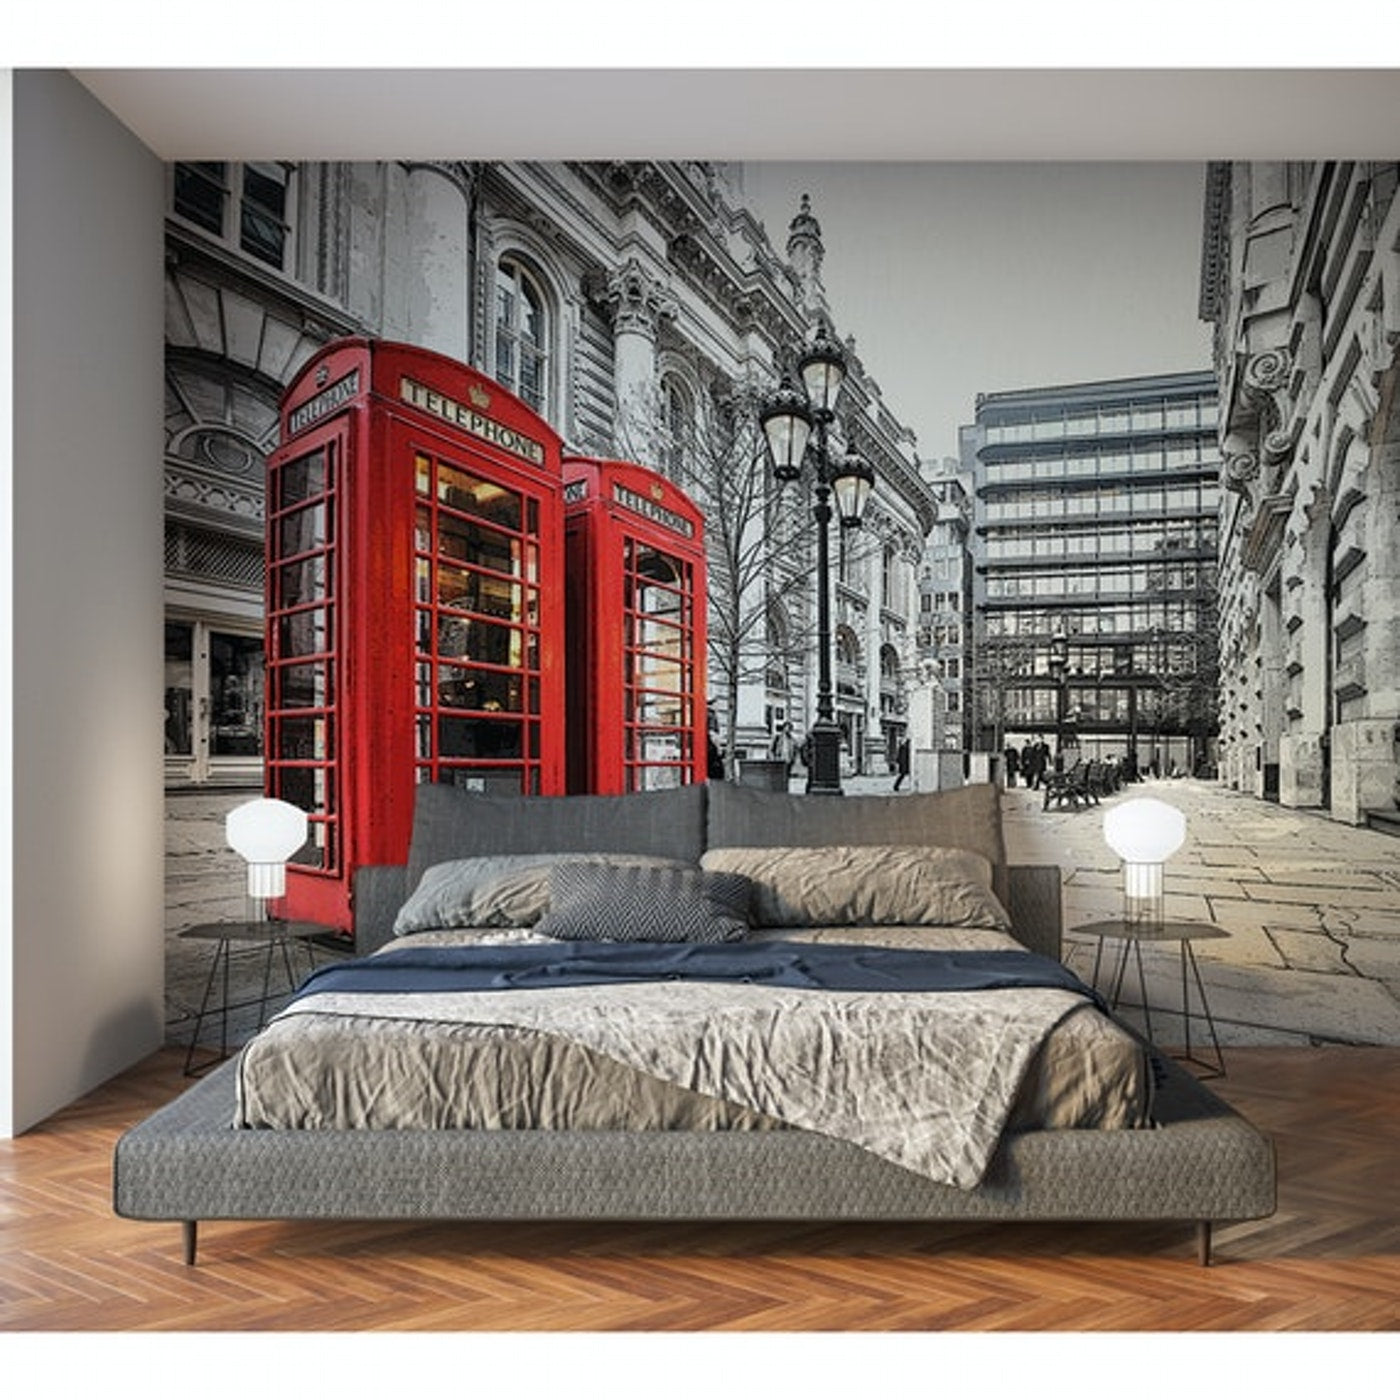 Papel Mural / London Telephone